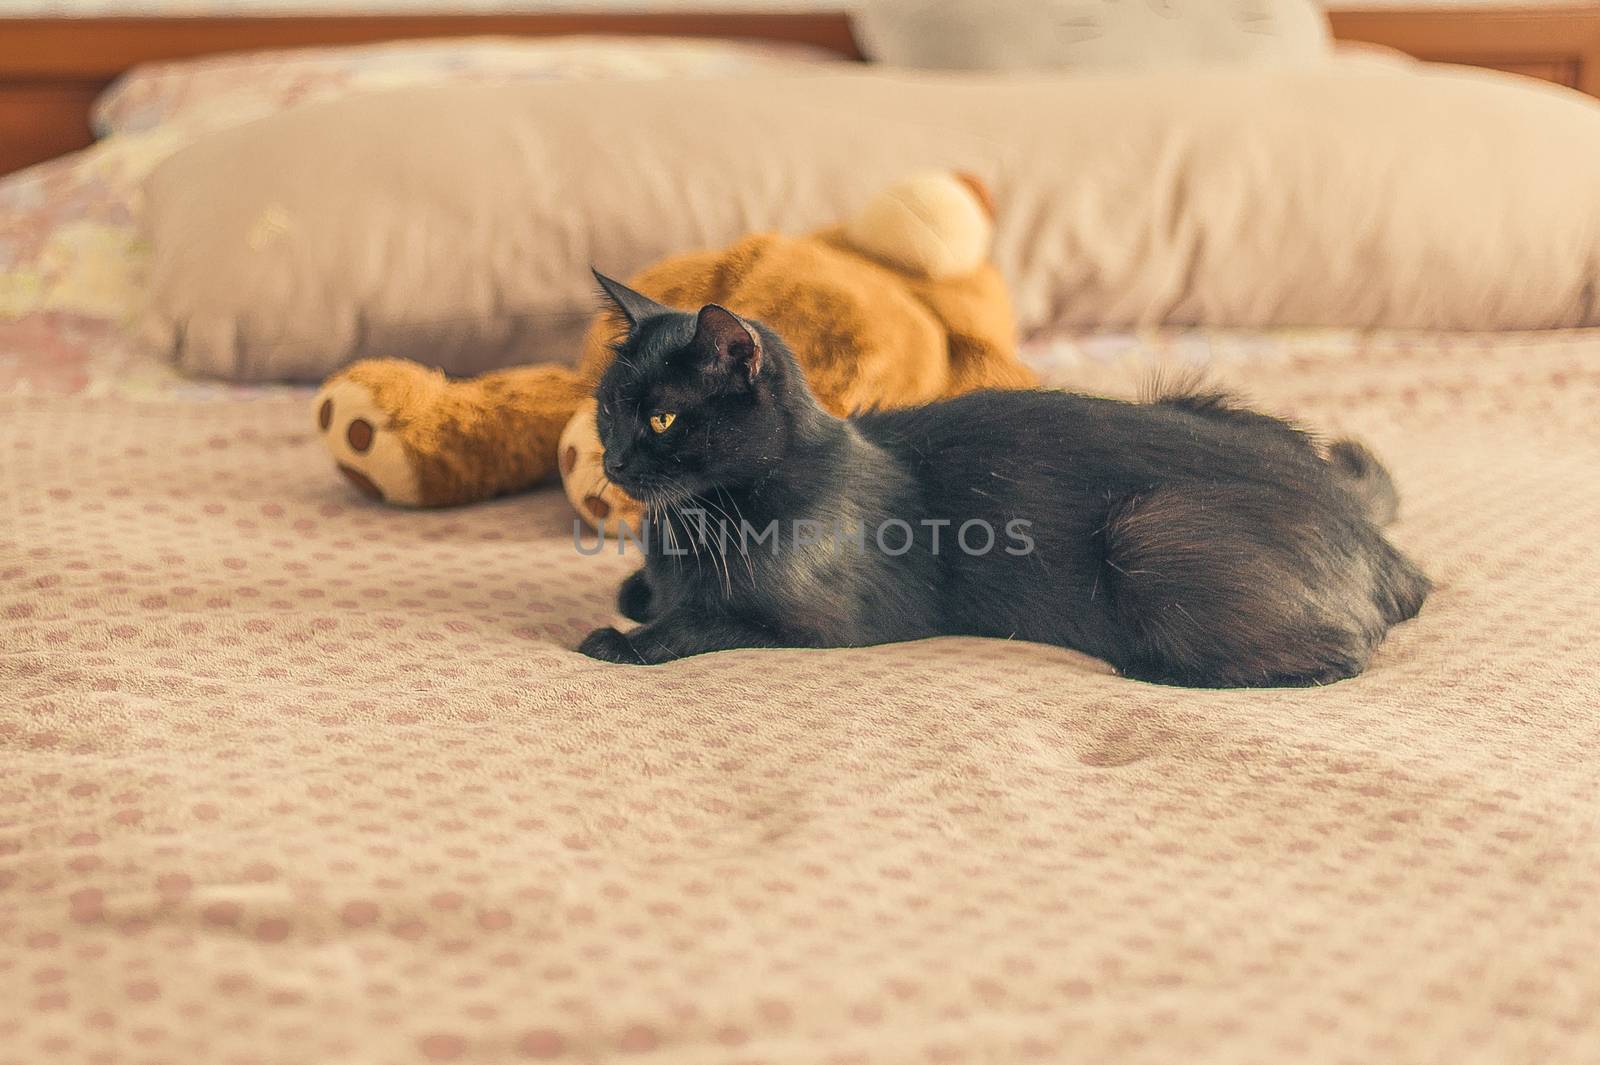 black cat rest on a bed near a teddy bear by chernobrovin